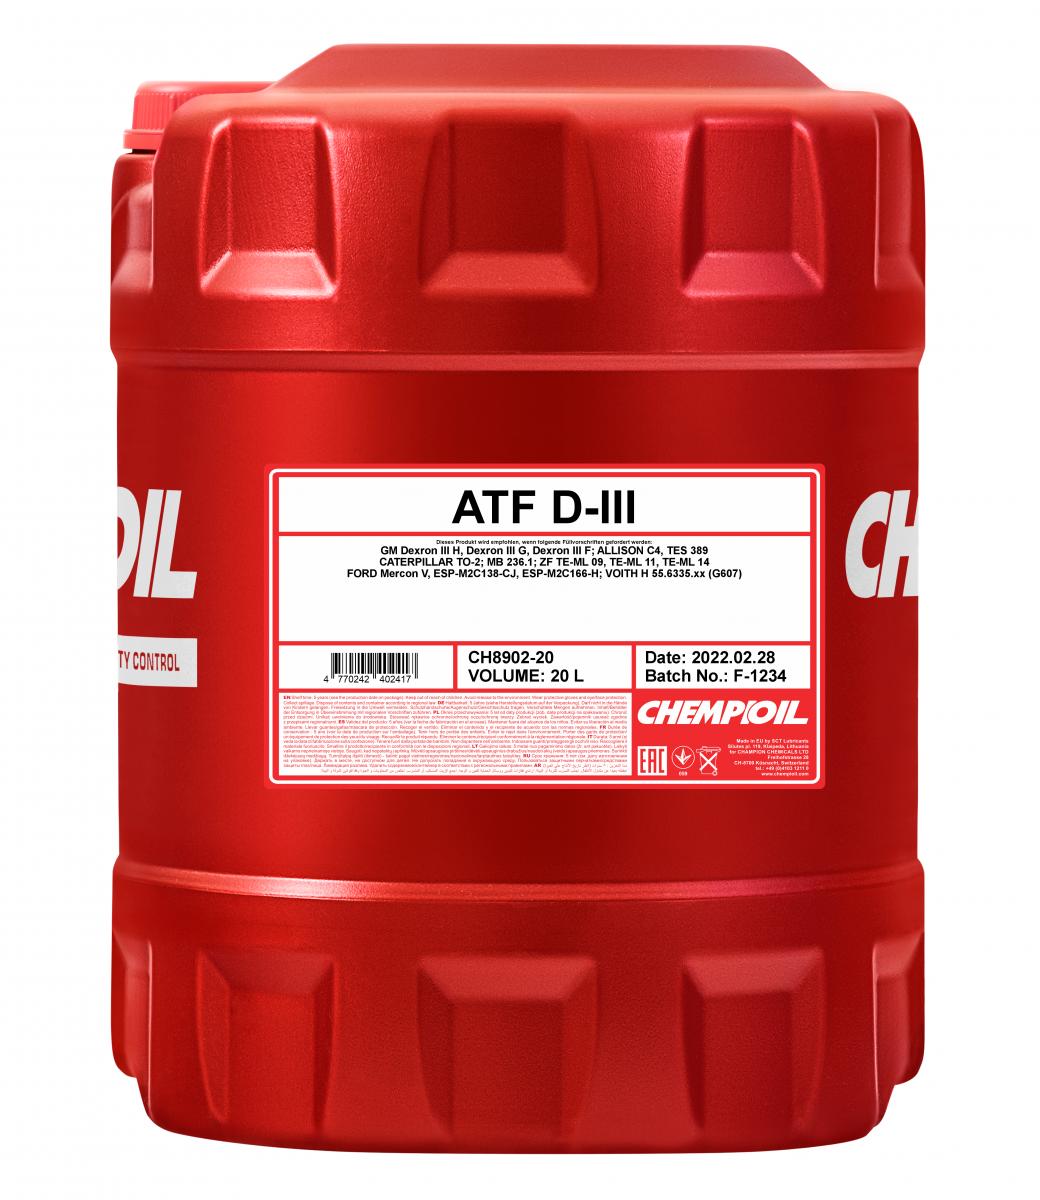 Chempioil ATF D-III Automatic Transmission Fluid